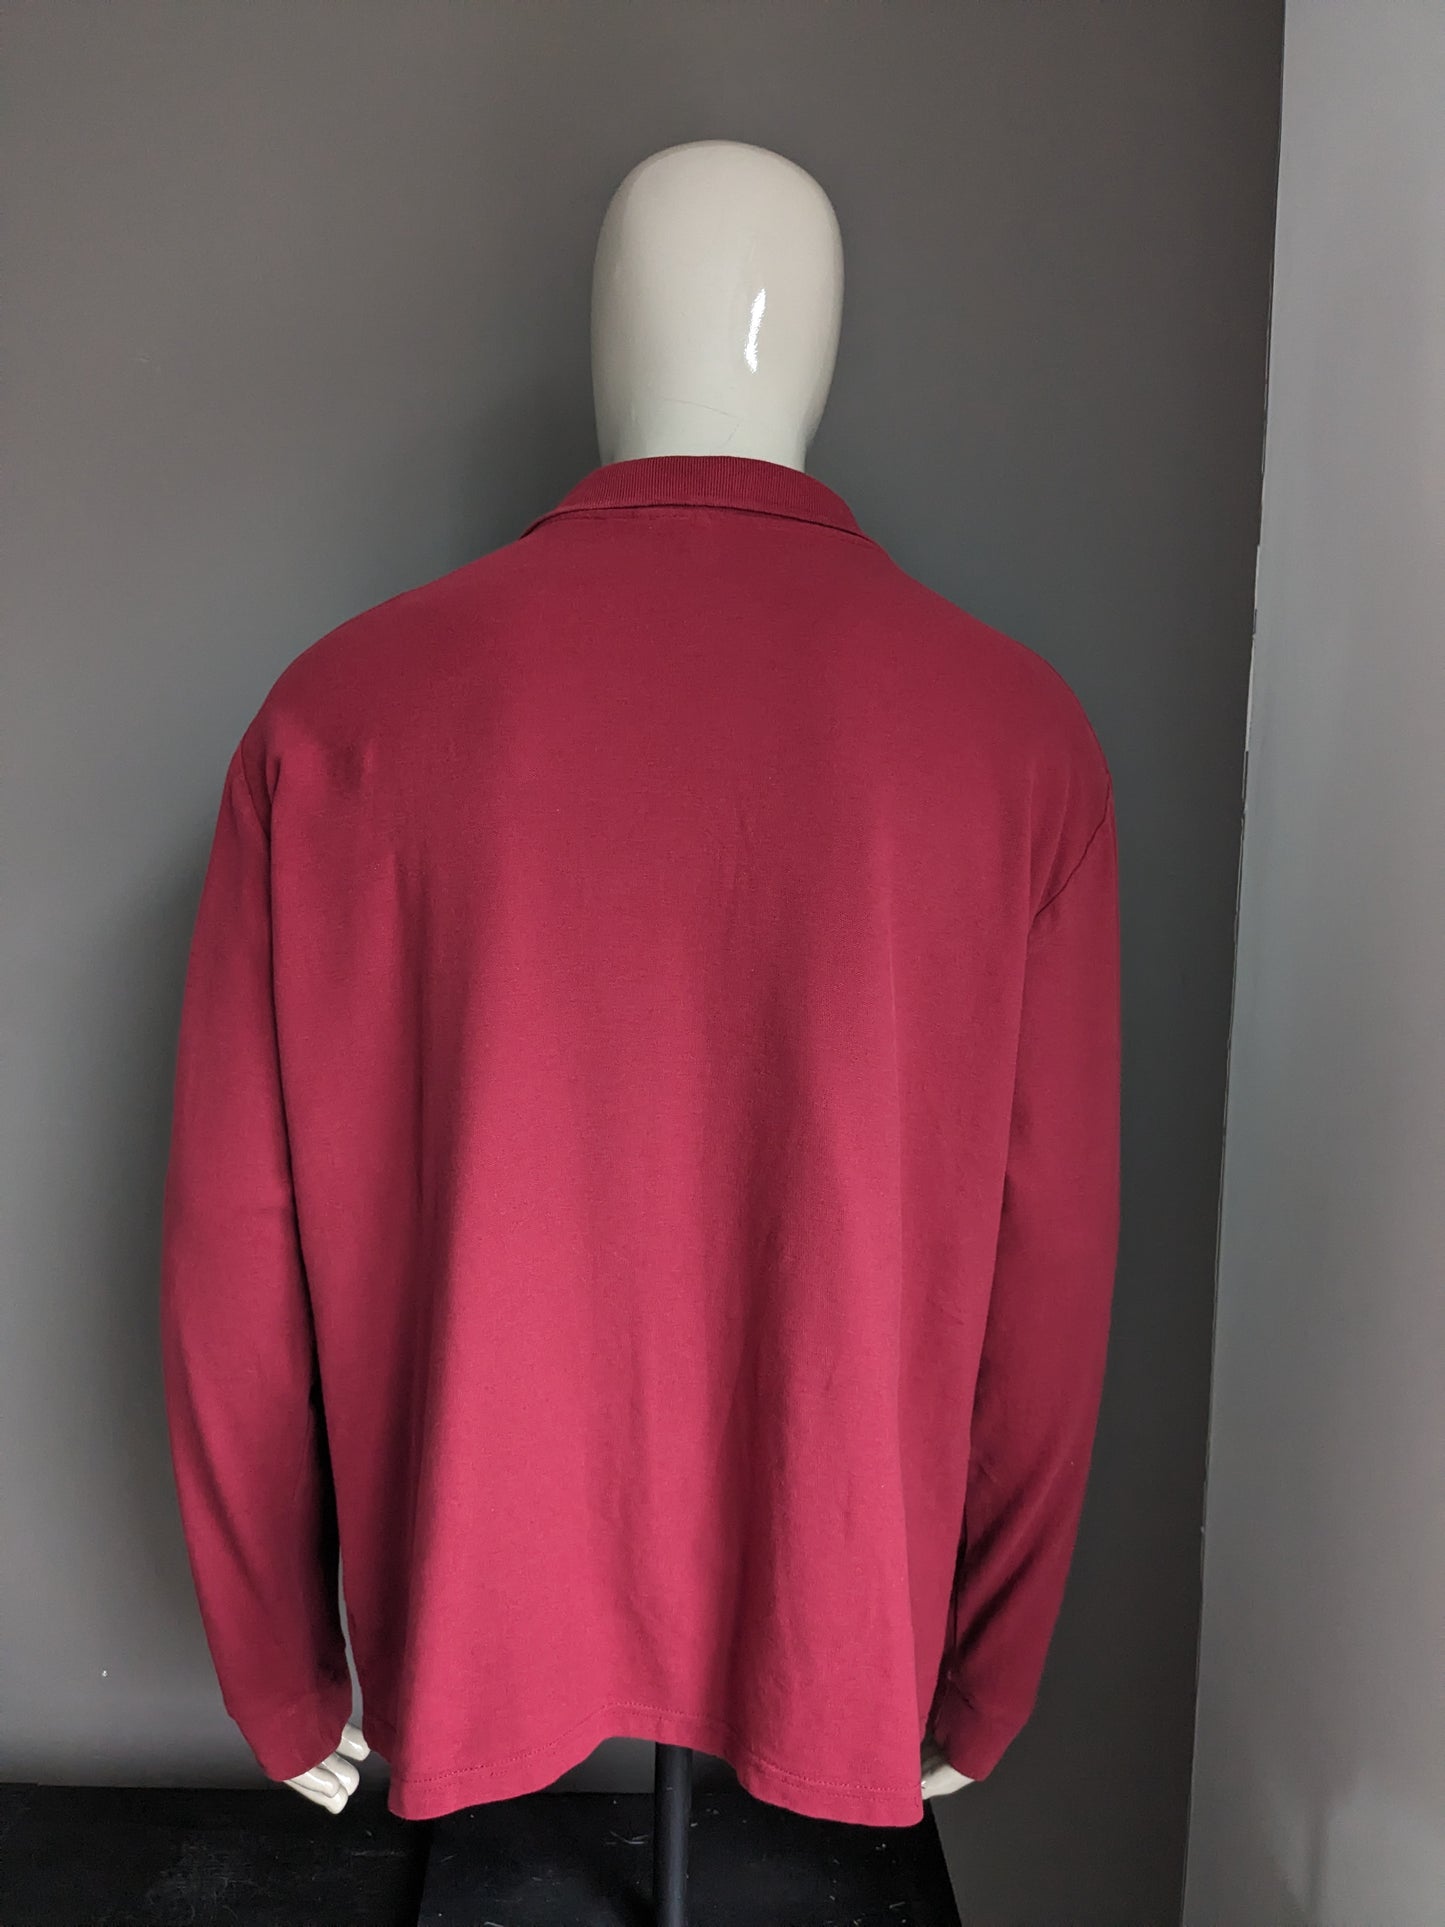 Killer whale polo sweater. Dark red colored. Size 3XL / XXXL.